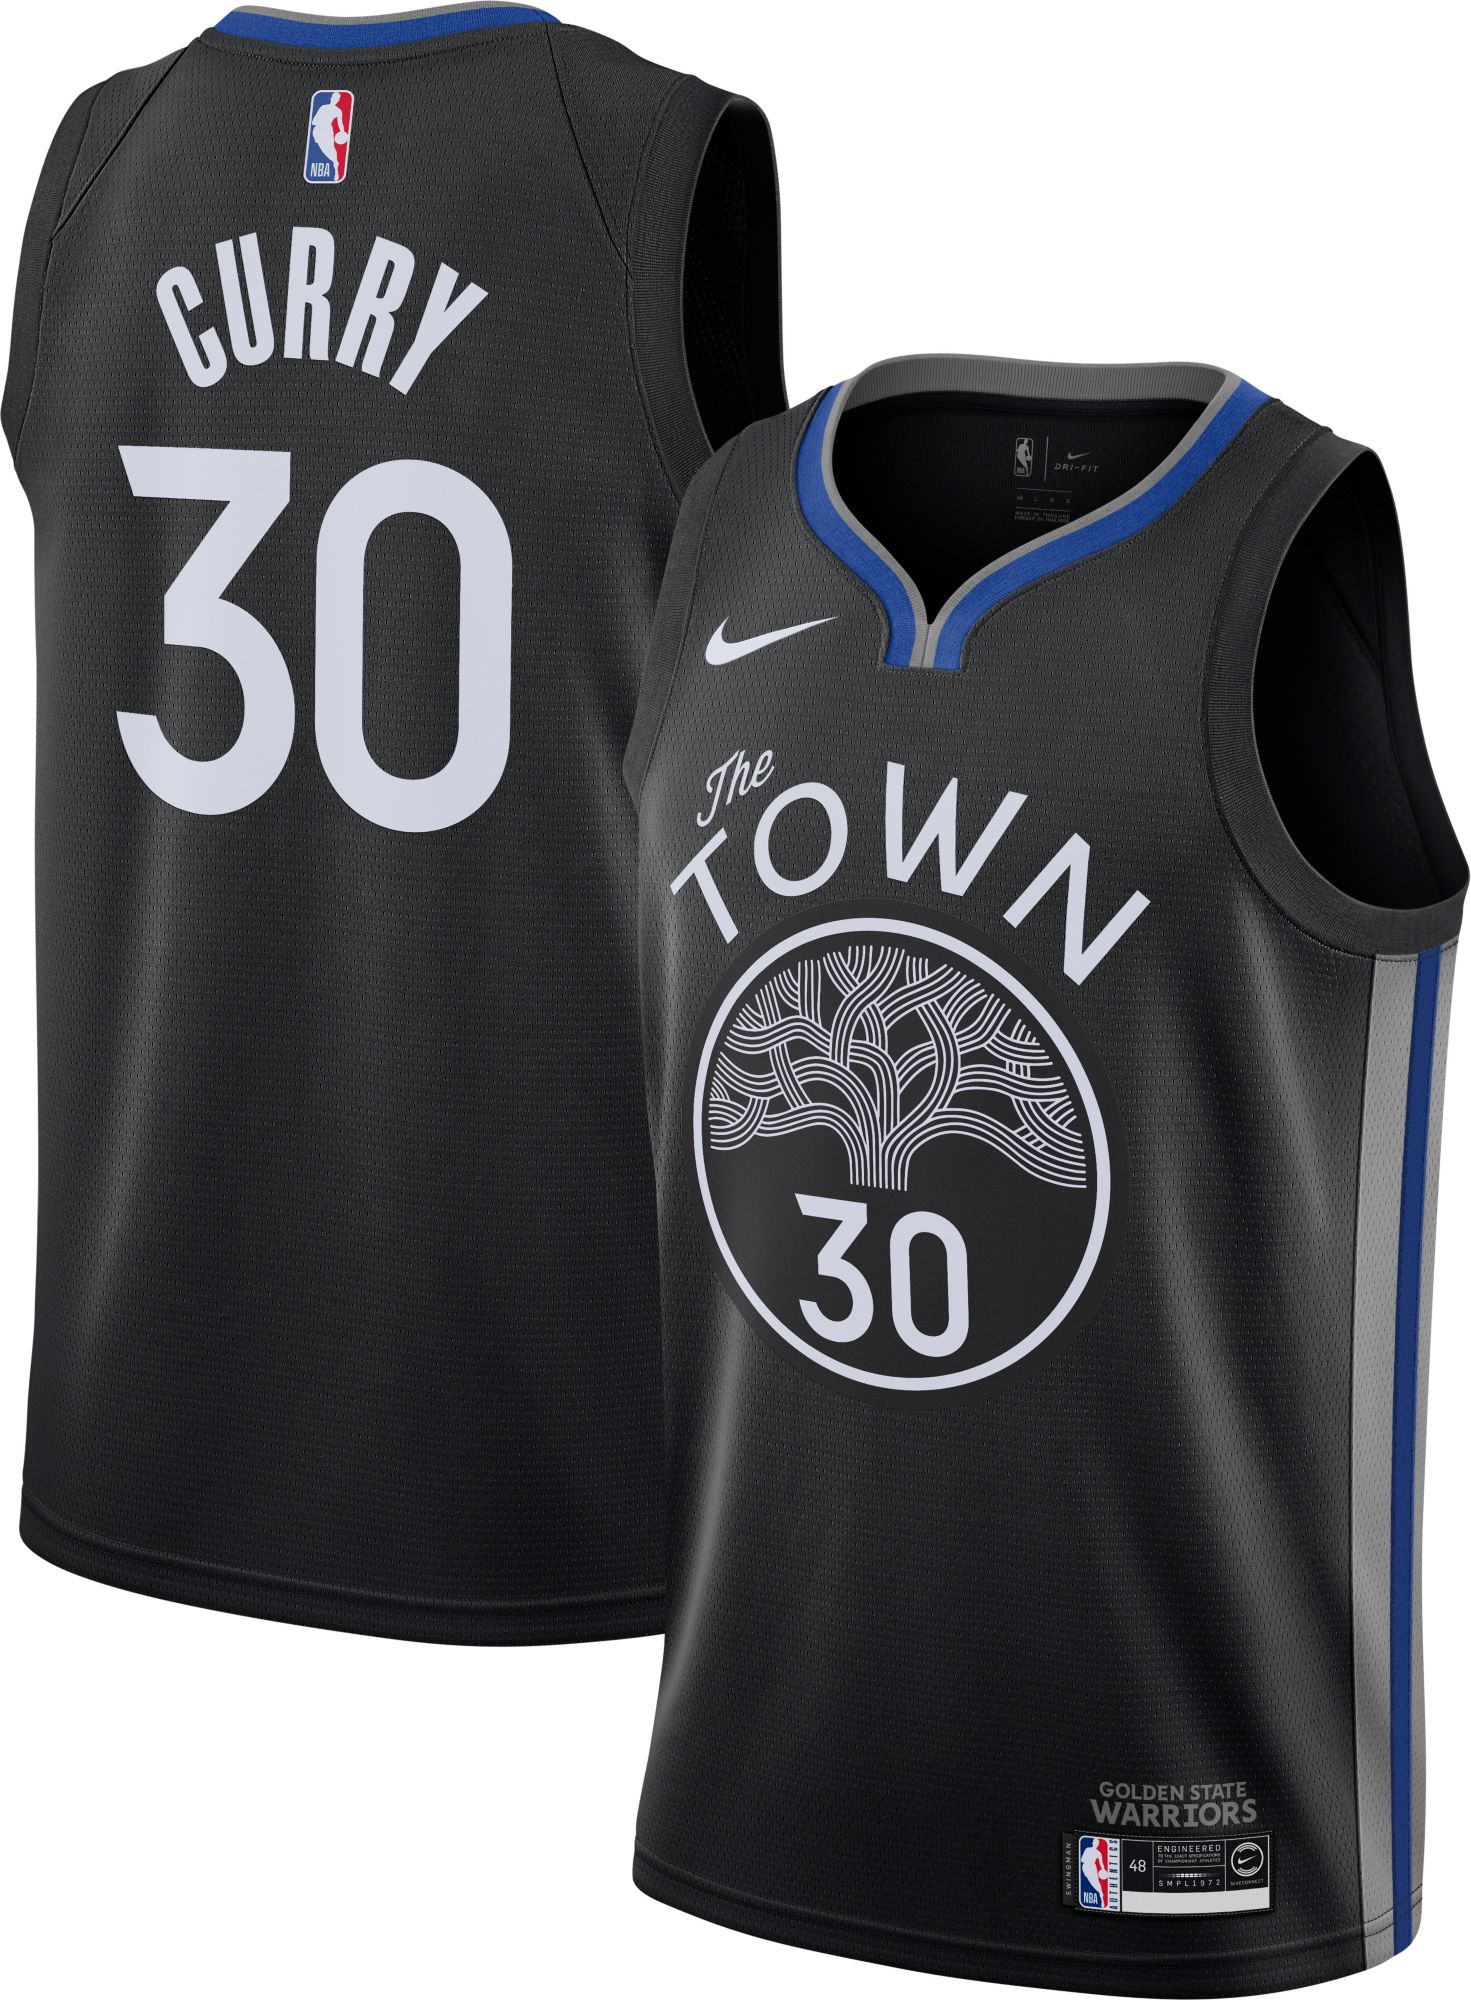 Stephen Curry City Edition #30 Golden State Warriors Men's Basketball Jersey 